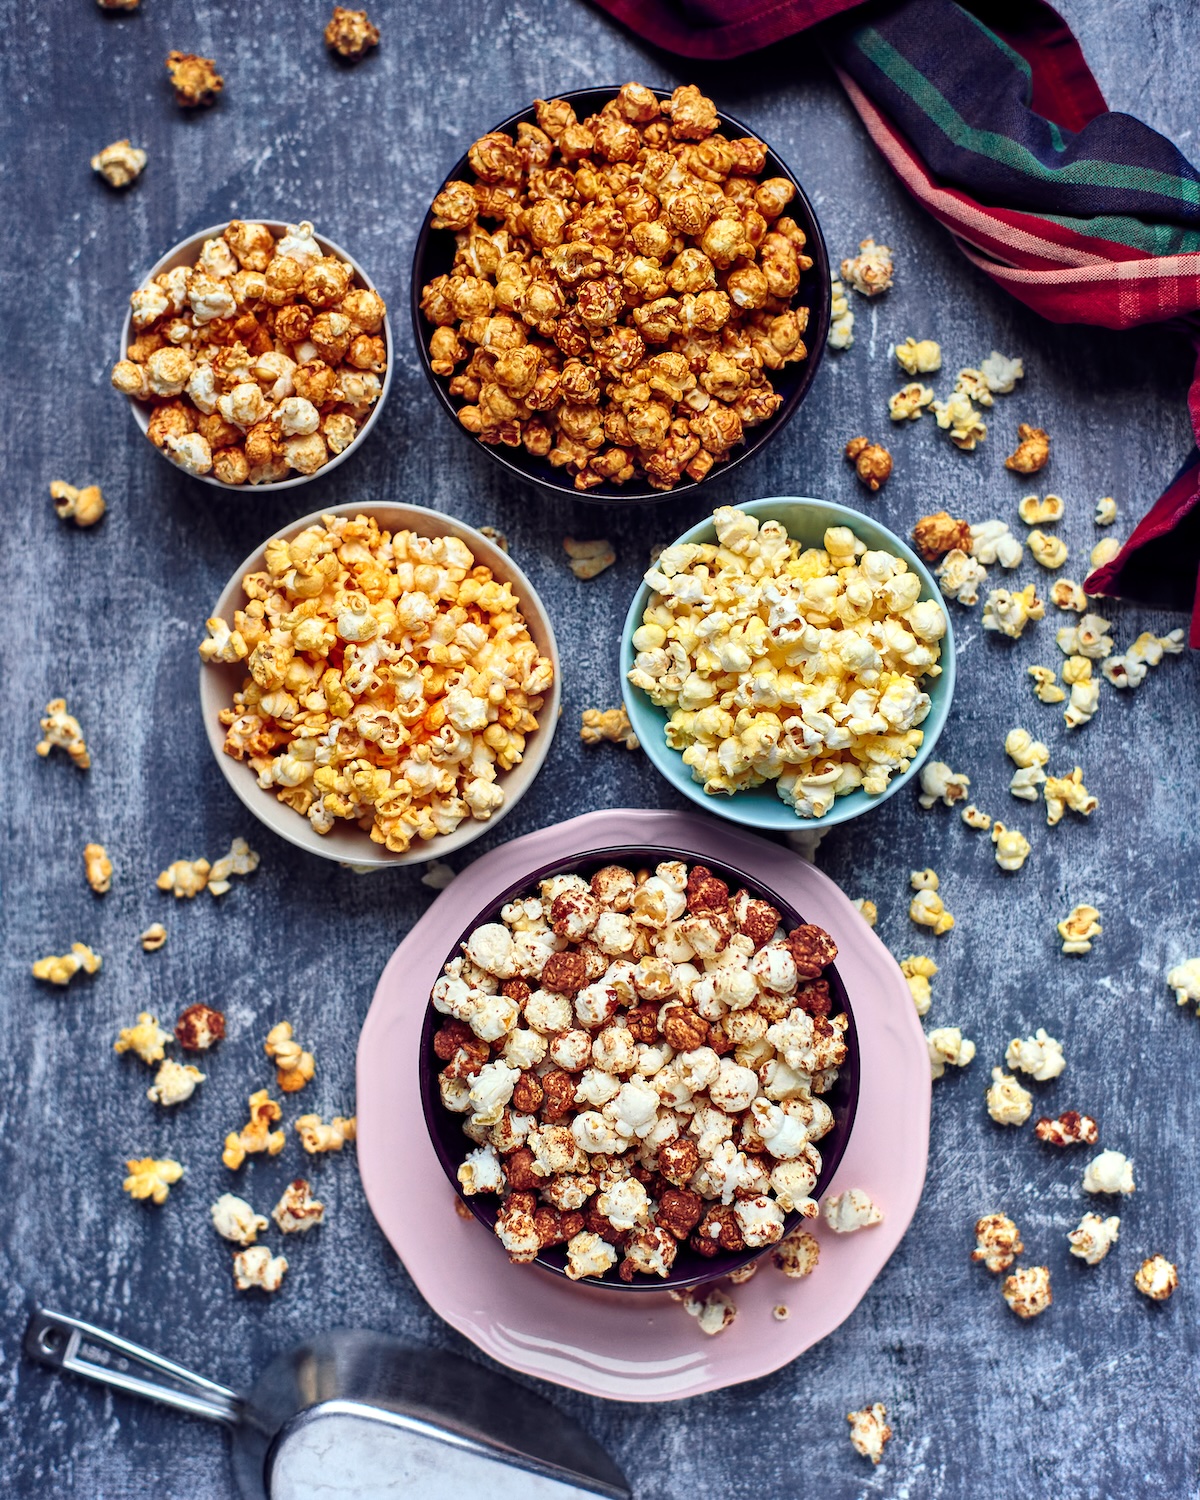 Popcorn ©Kovenkin shutterstock